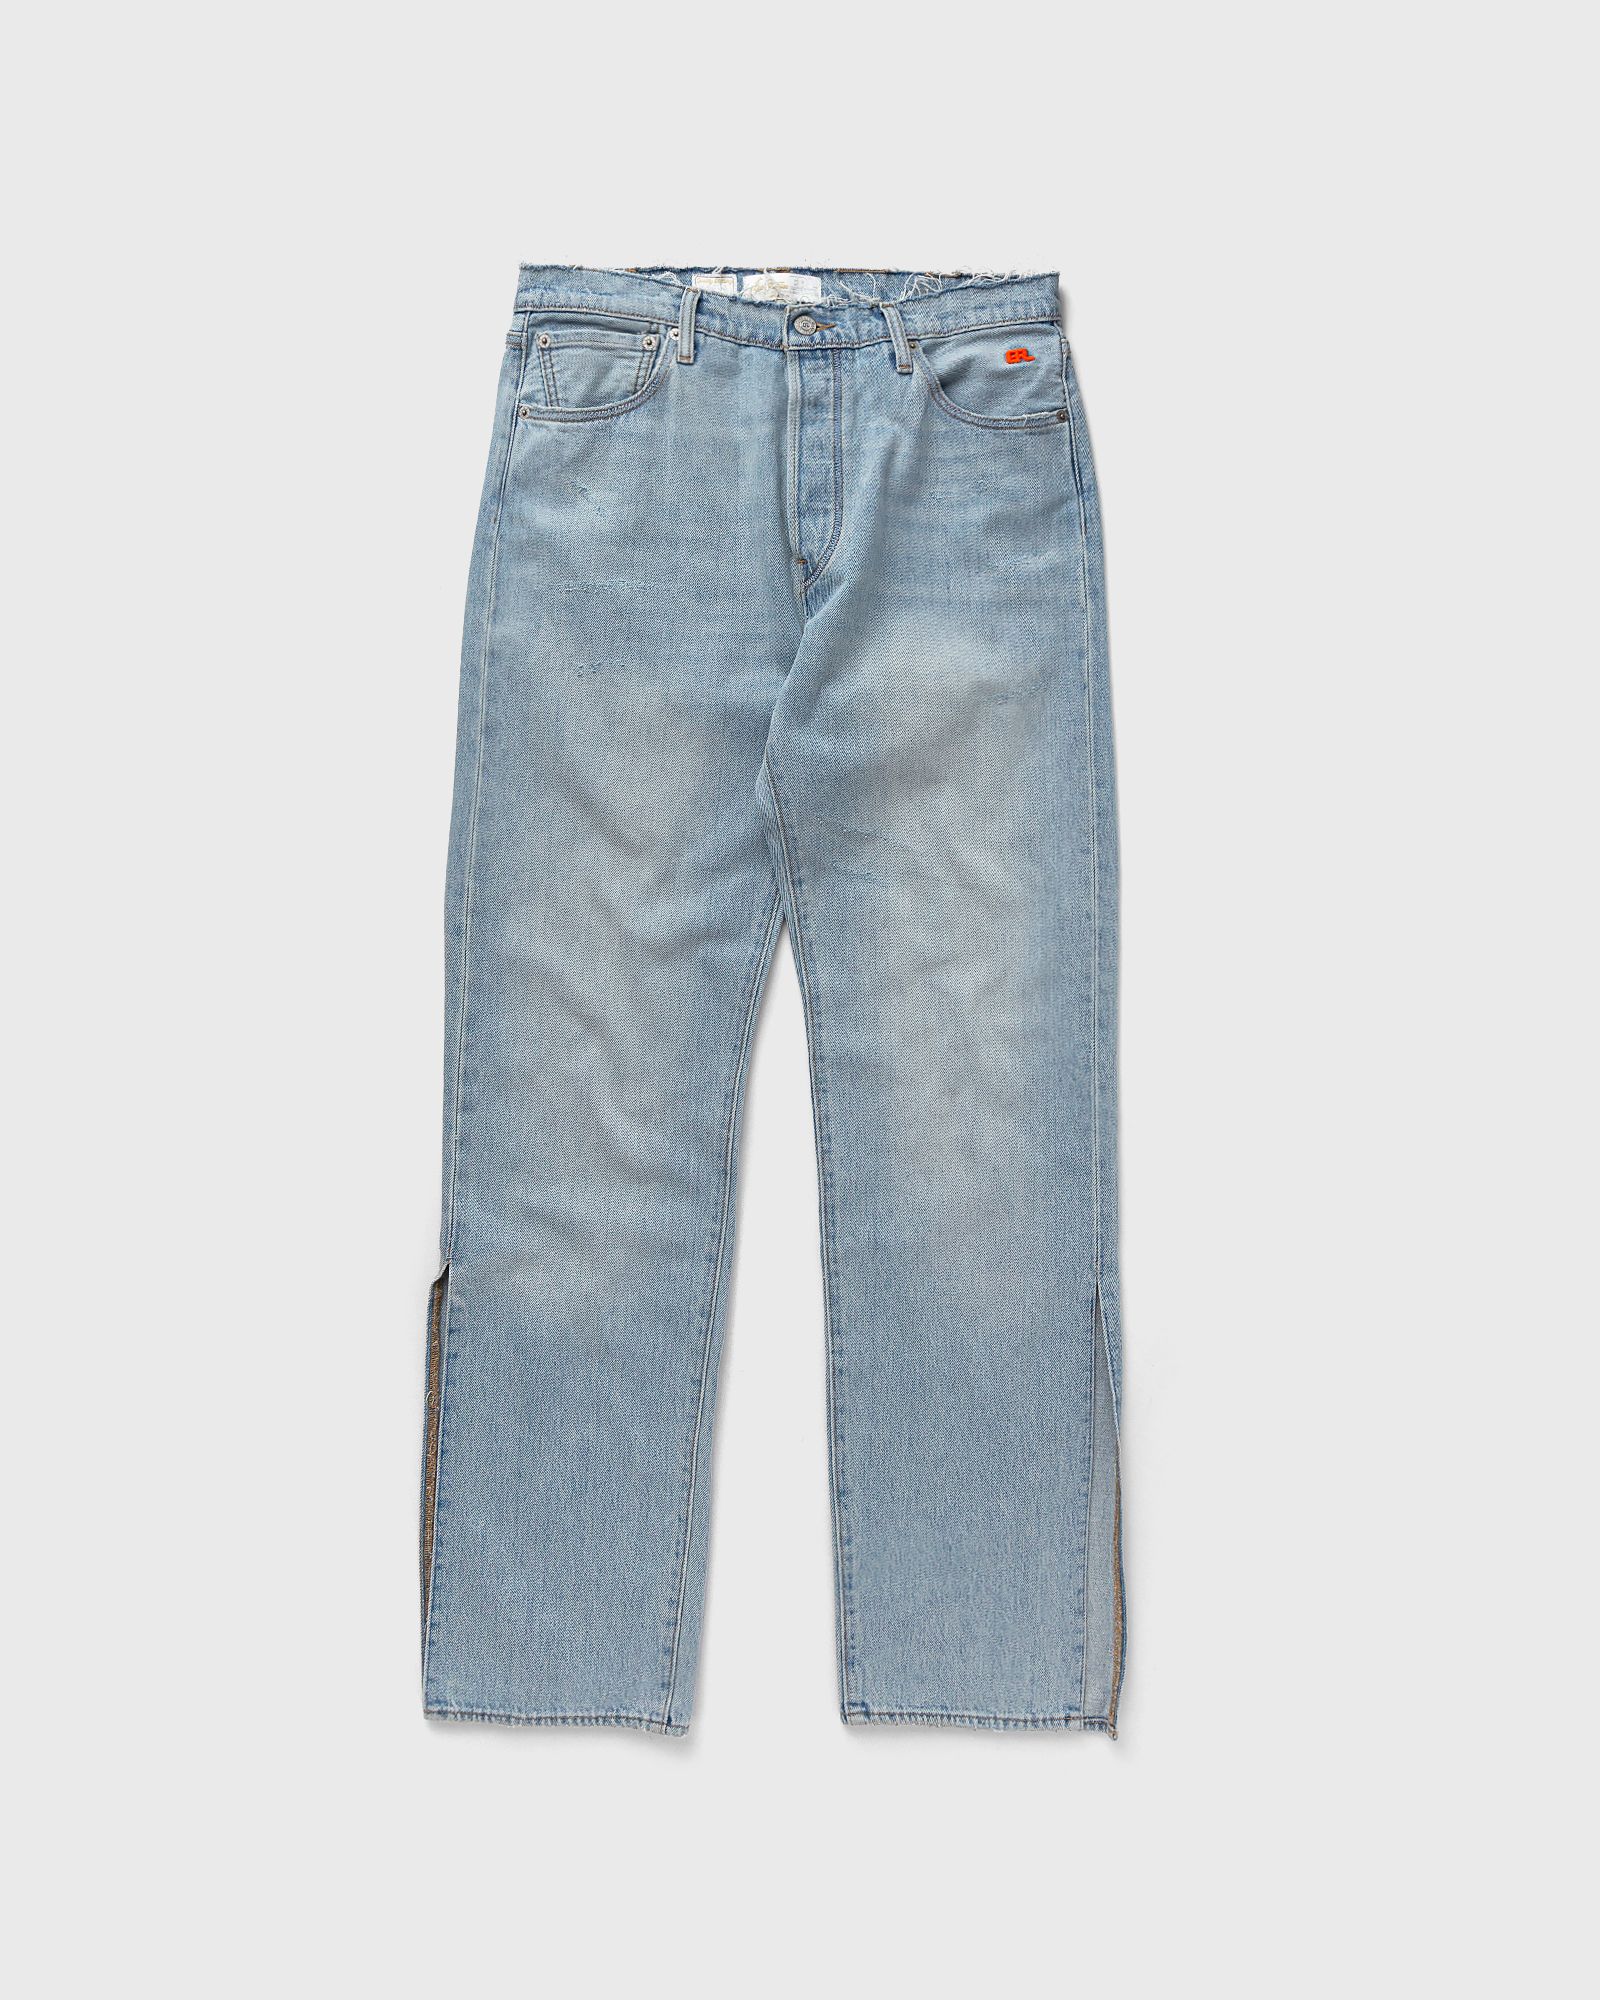 ERL - x levis 501 denim woven men jeans blue in größe:xxl